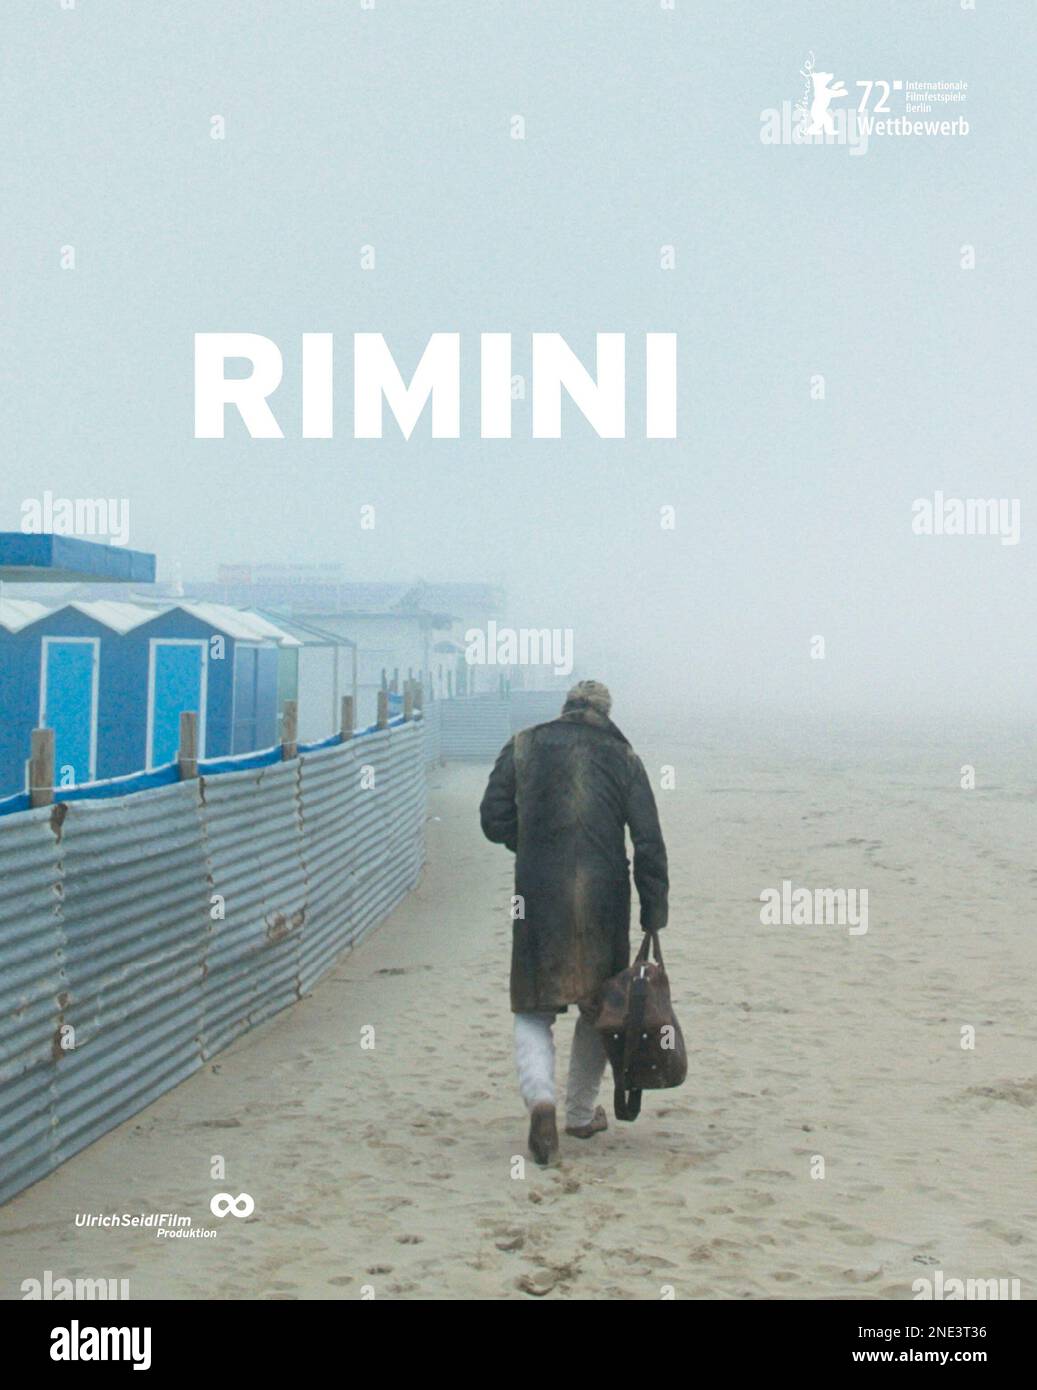 RIMINI (2022), directed by ULRICH SEIDL. Credit: ULRICH SEIDL FILM PRODUKTION GMBH / Album Stock Photo